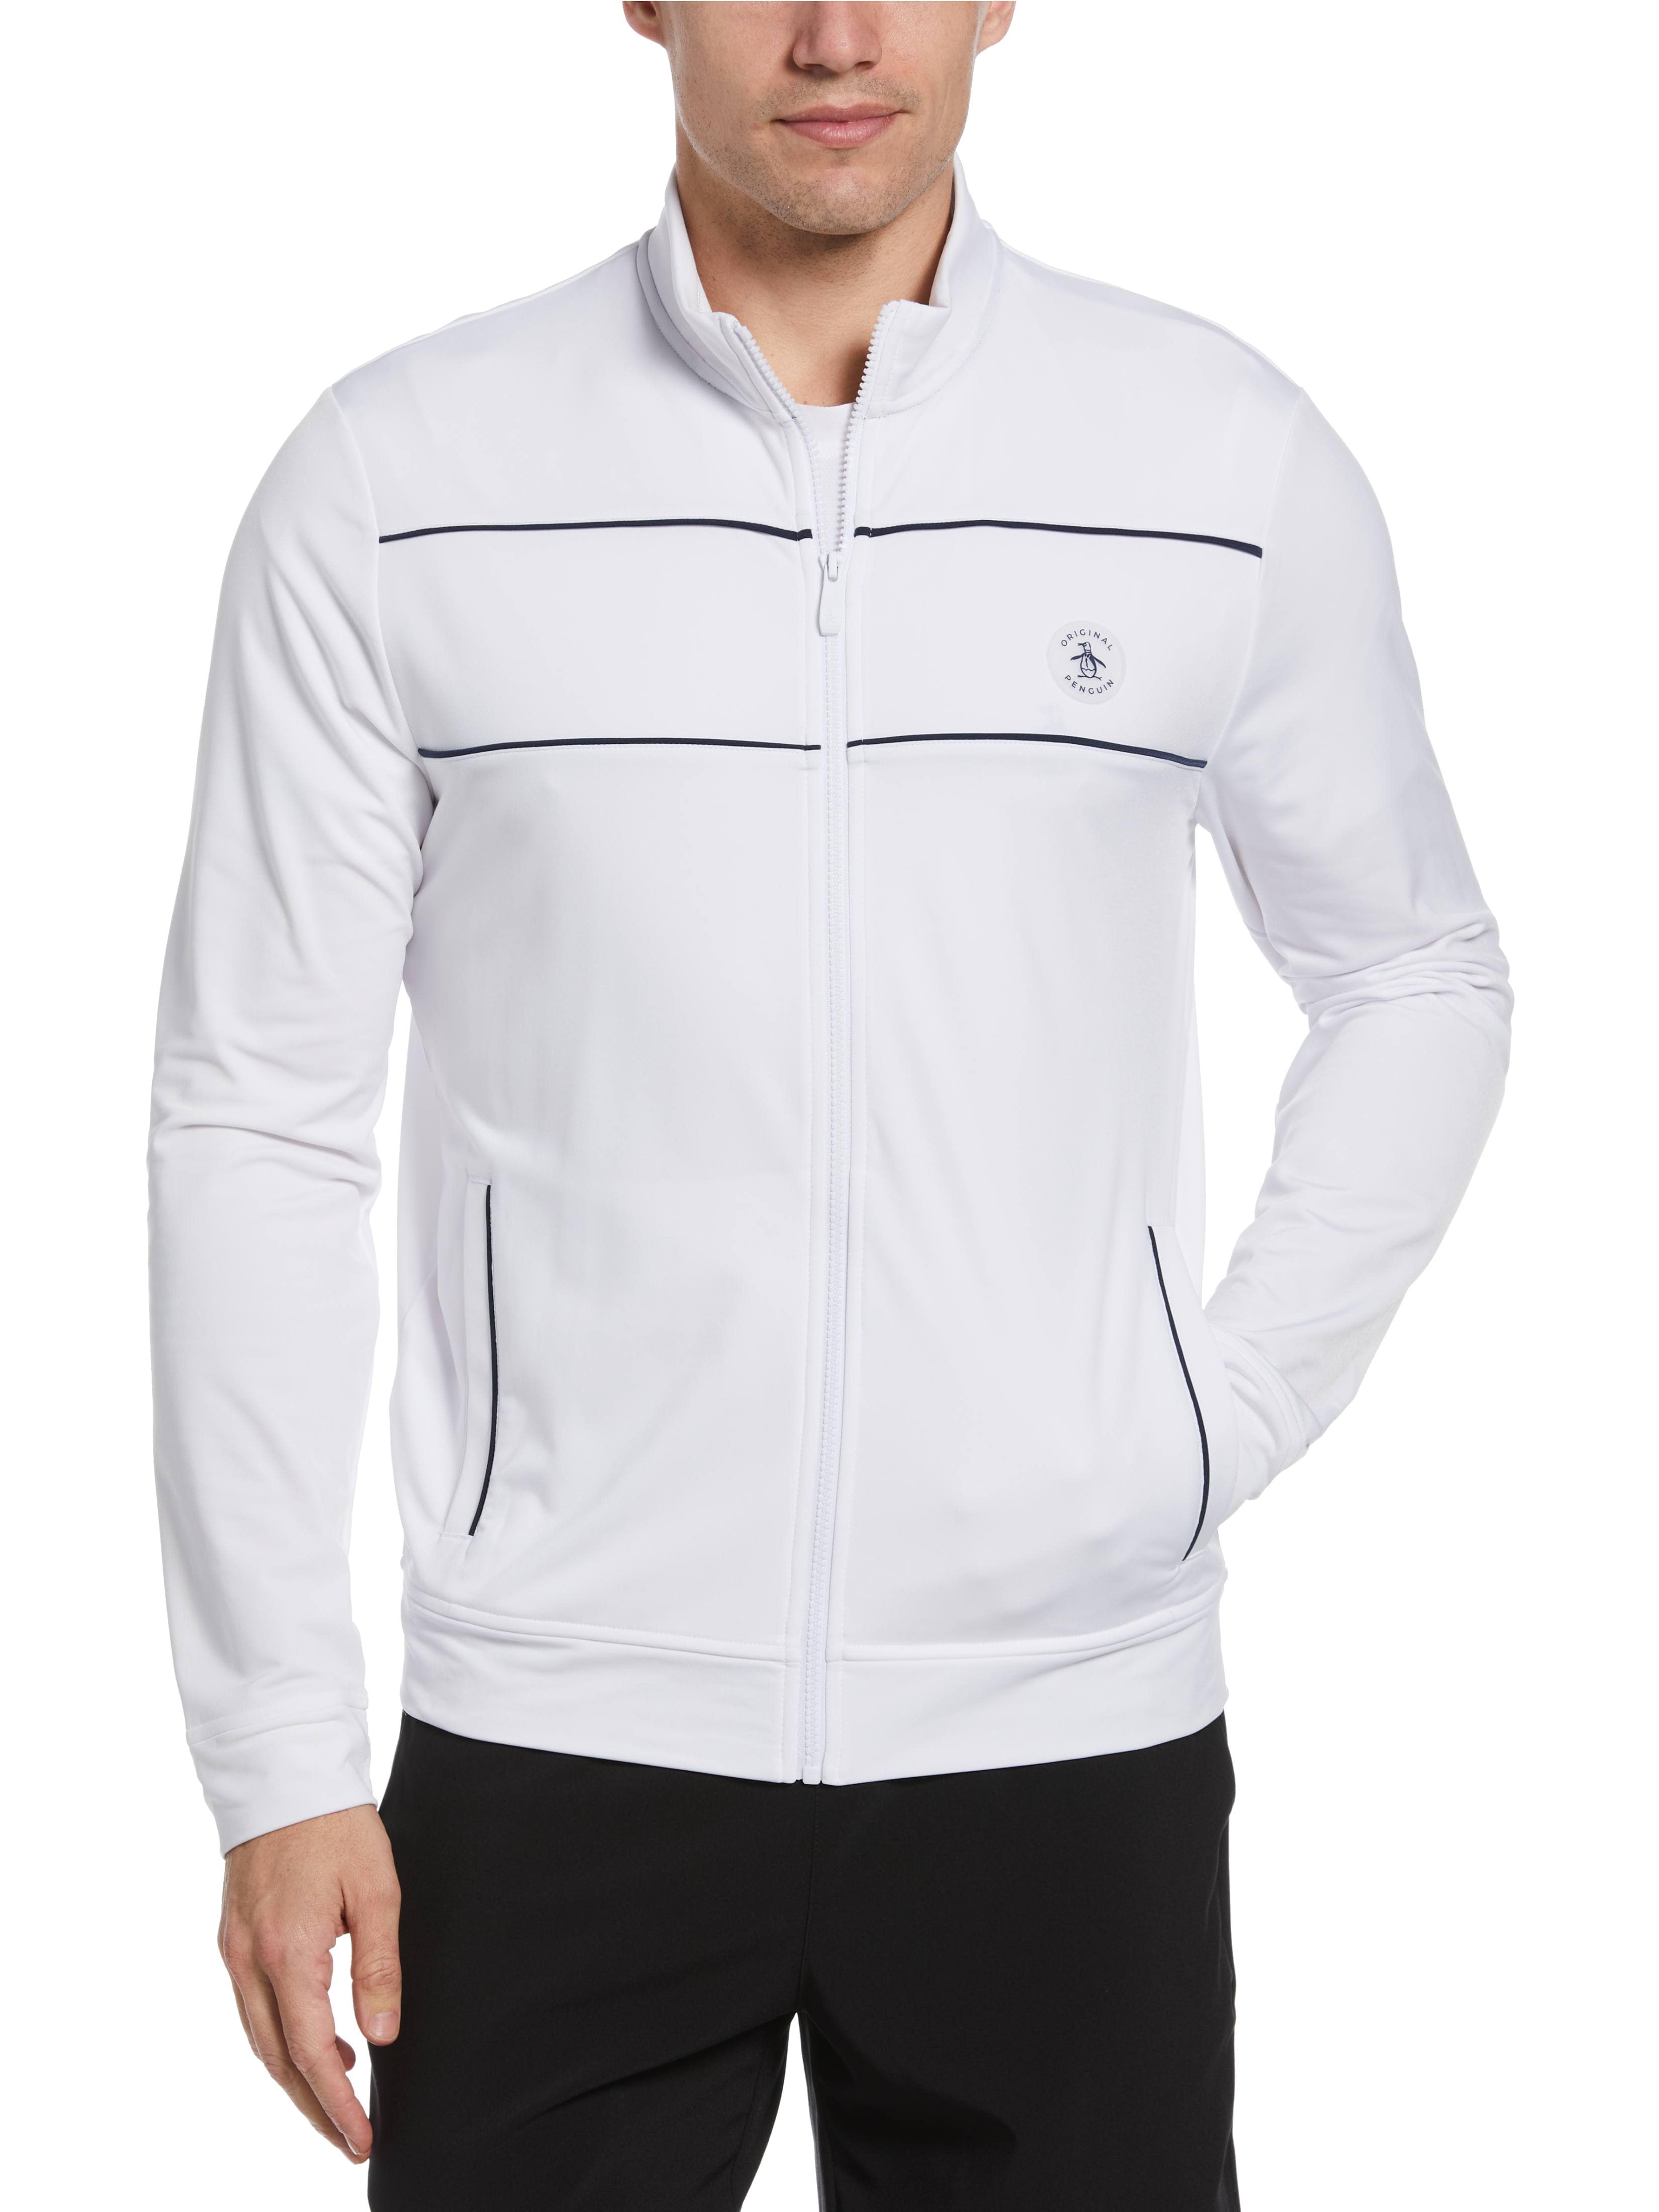 Original Penguin Mens Essential Tennis Track Jacket Top, Size Medium, White, Polyester/Elastane | Golf Apparel Shop